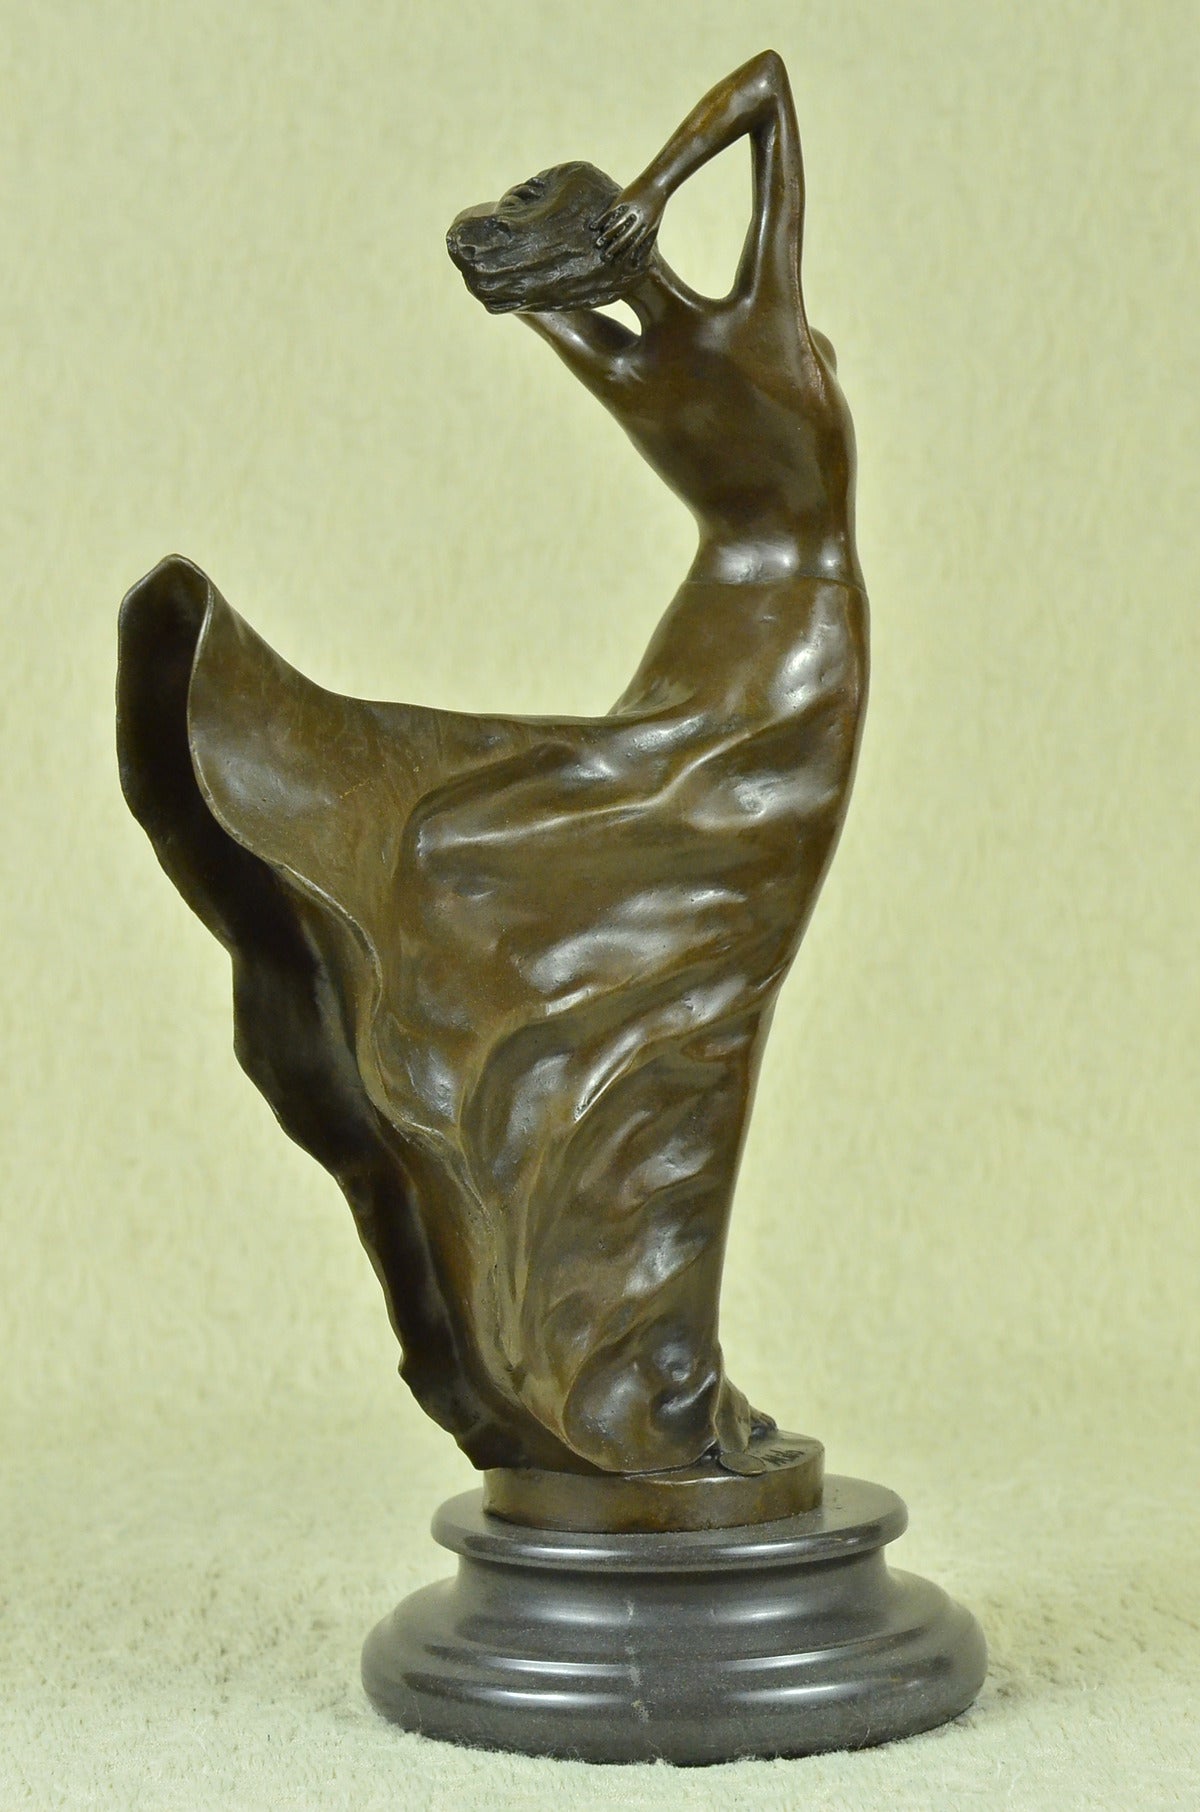 Handcrafted bronze sculpture SALE Deco Art Woman Goddess Sea Mermaid Sensual